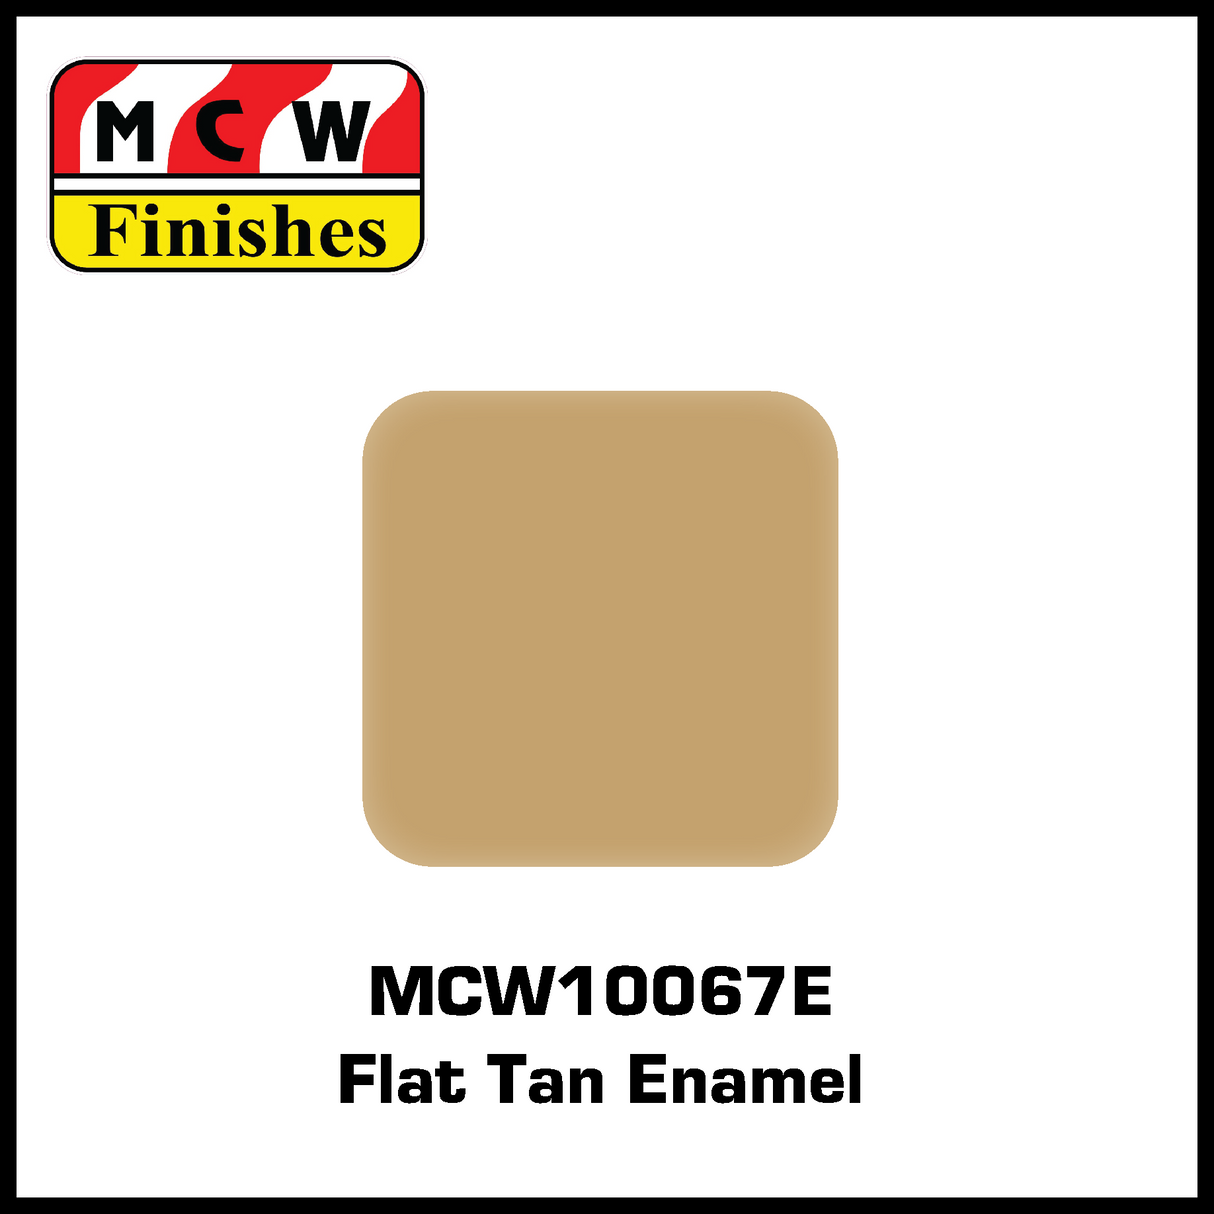 MCW Finishes Flat Tan Enamel